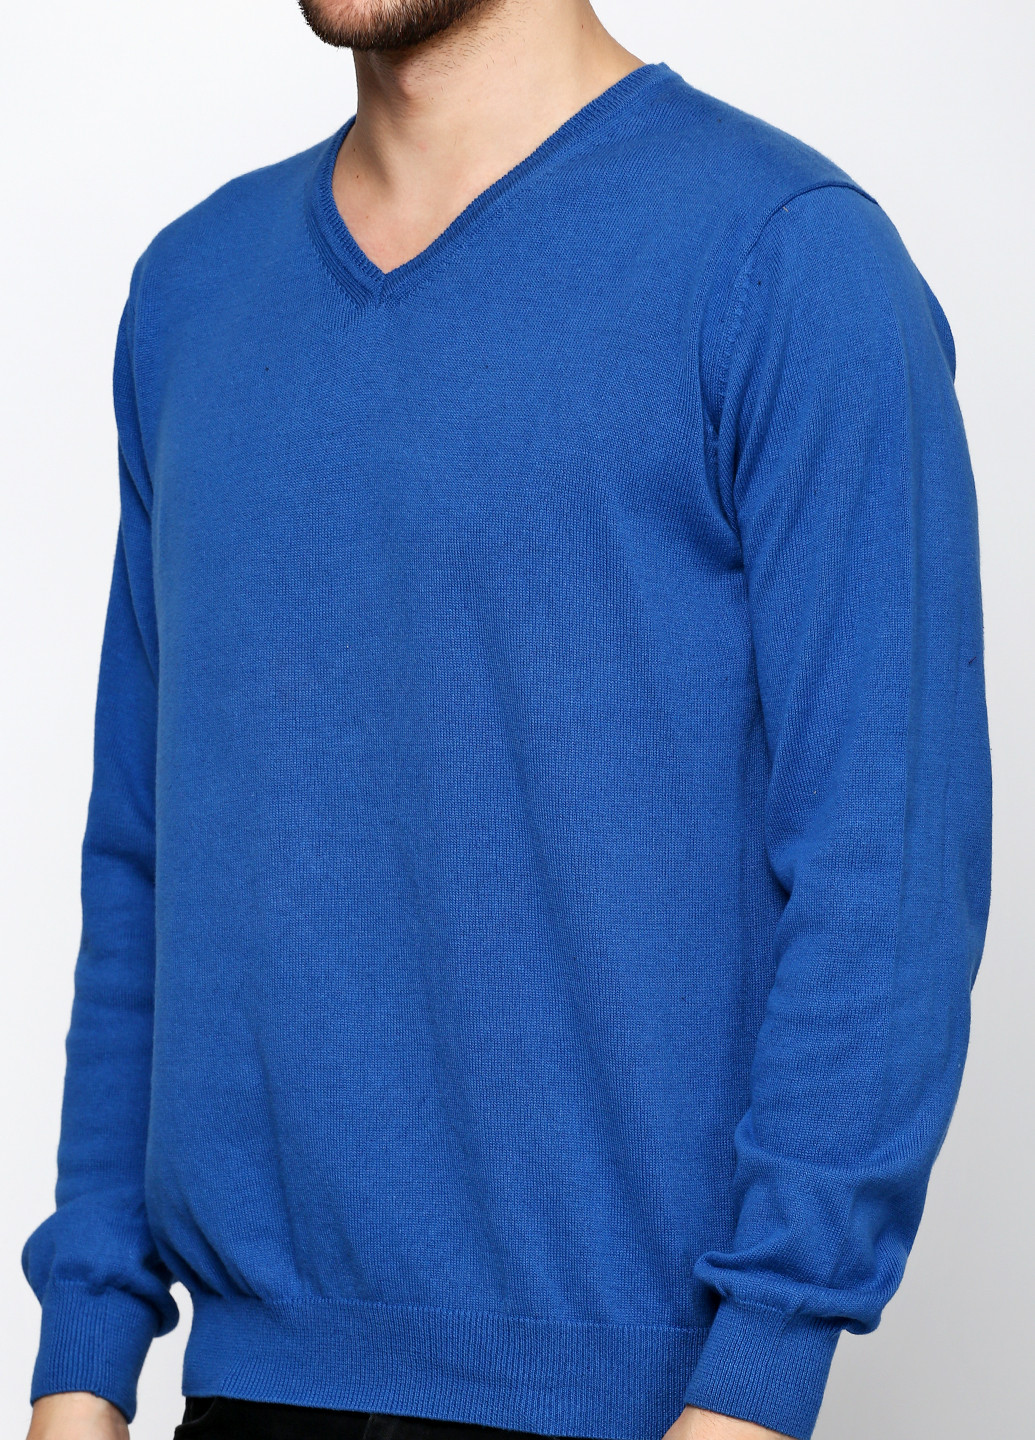 Синий демисезонный пуловер пуловер OVS